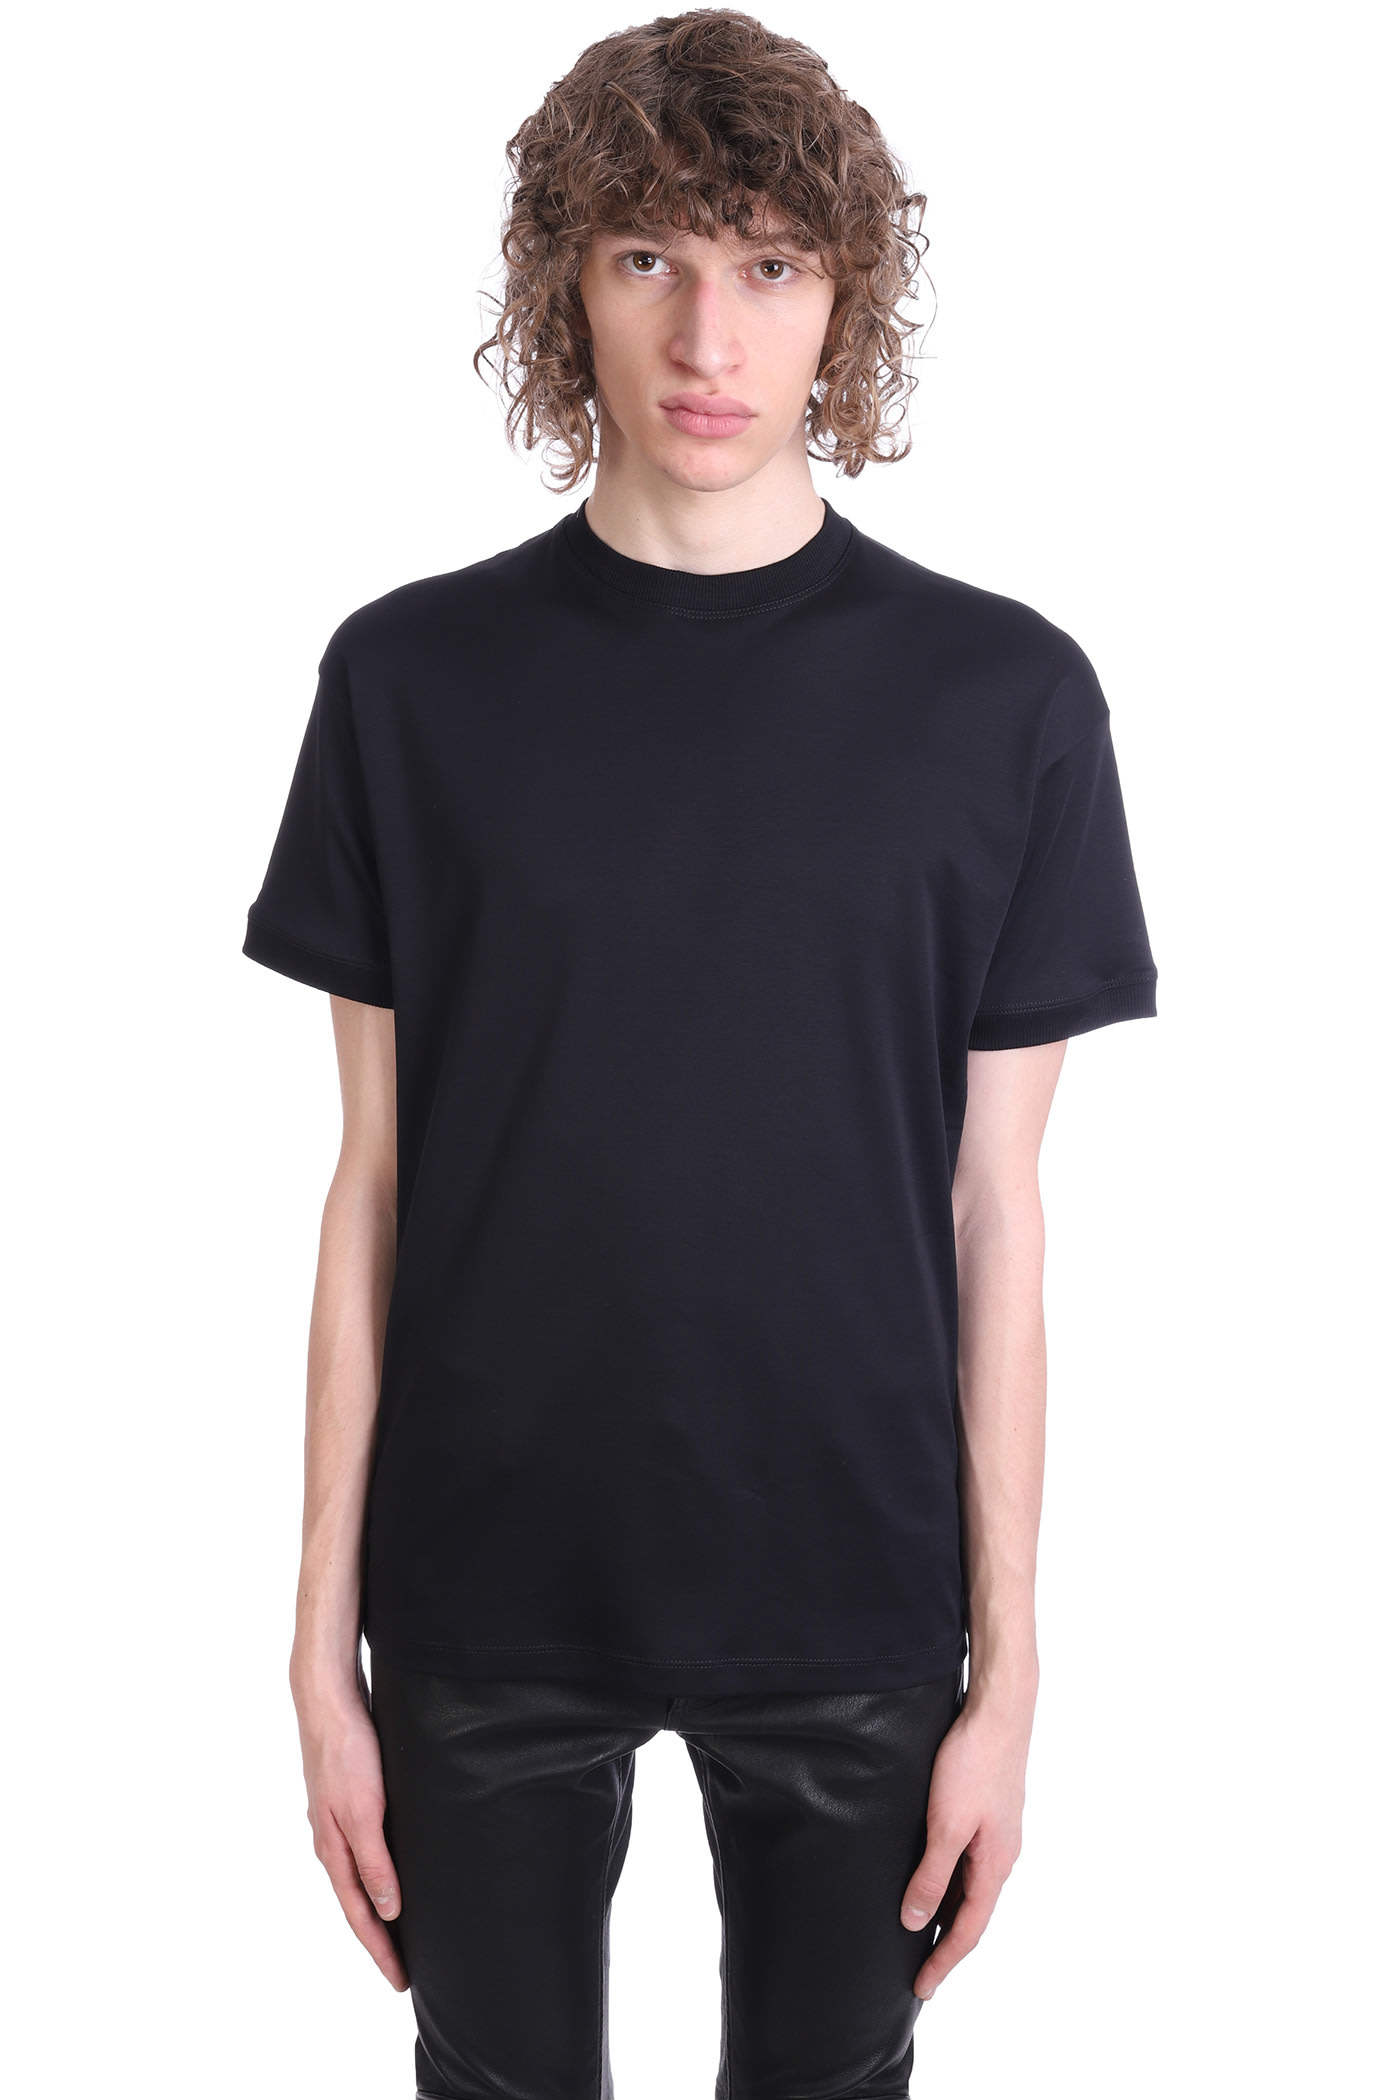 Jacob Lee T-shirt In Black Cotton